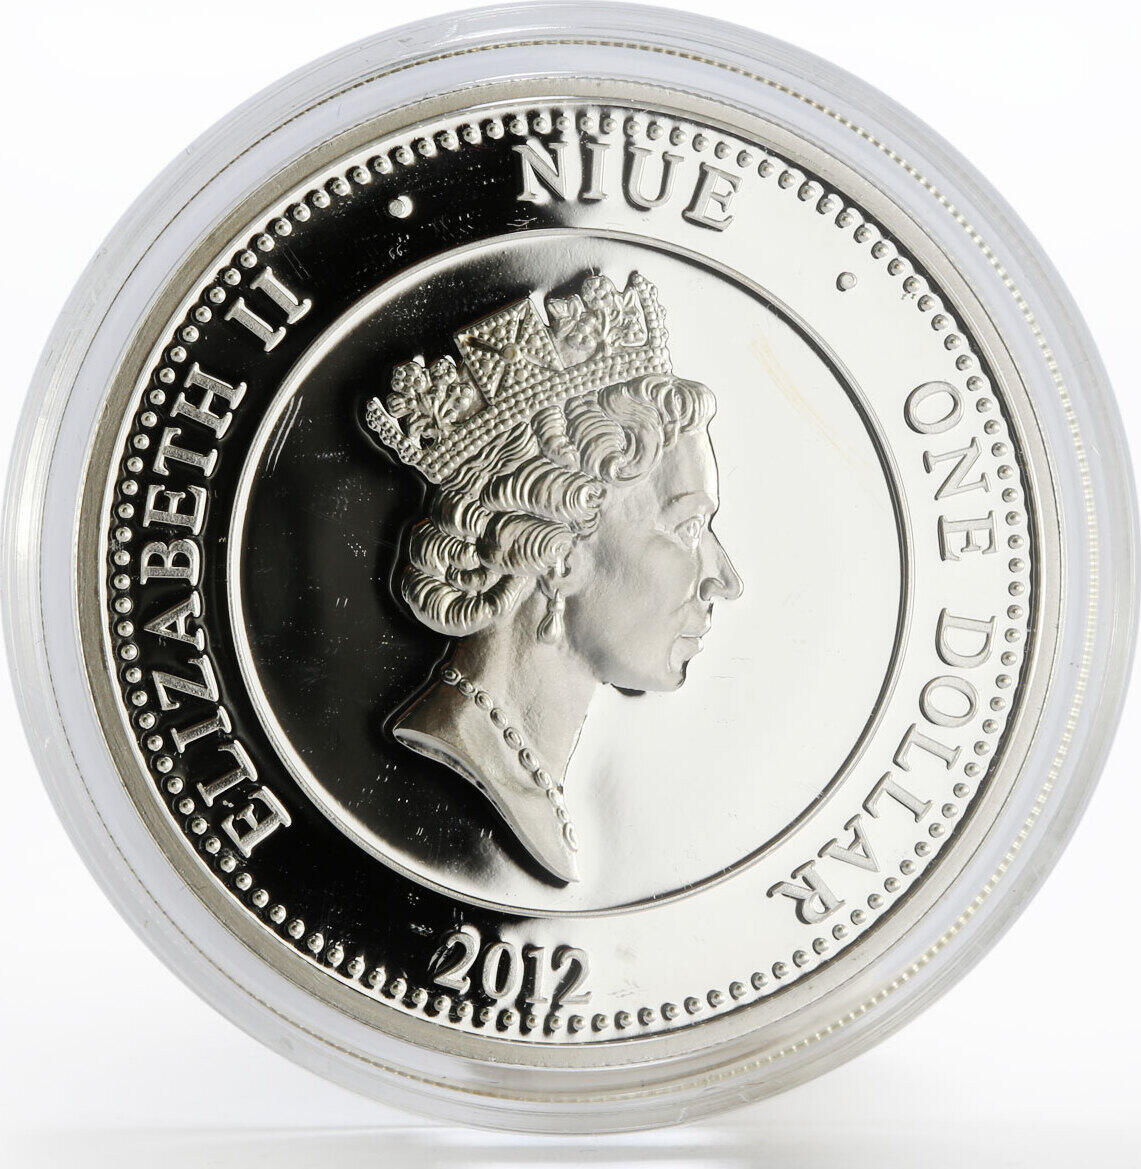 1 серебряный доллар. Серебряная монета доллар 2012 Niue. США 1 доллар (Dollar) серебро 2012. Монета 2012 ГМИИ.